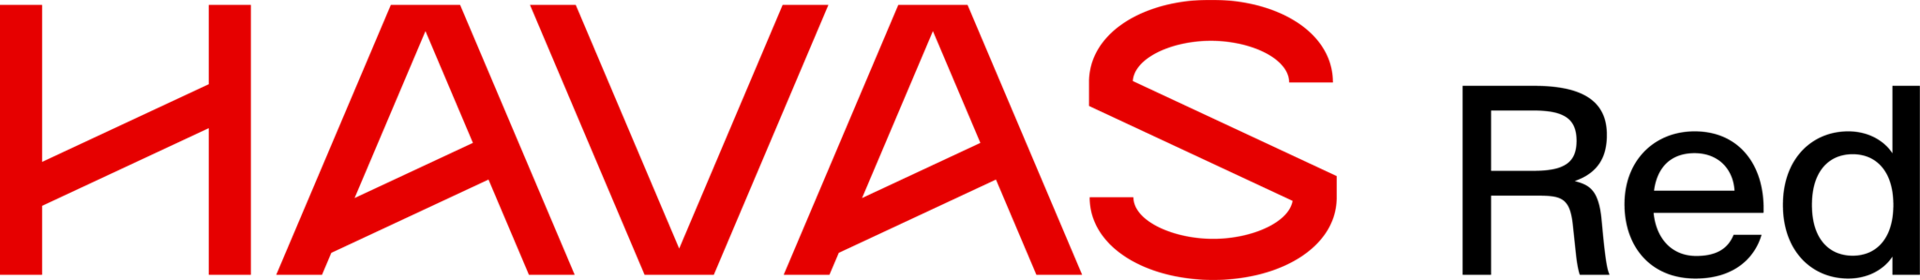 Havas Red logo